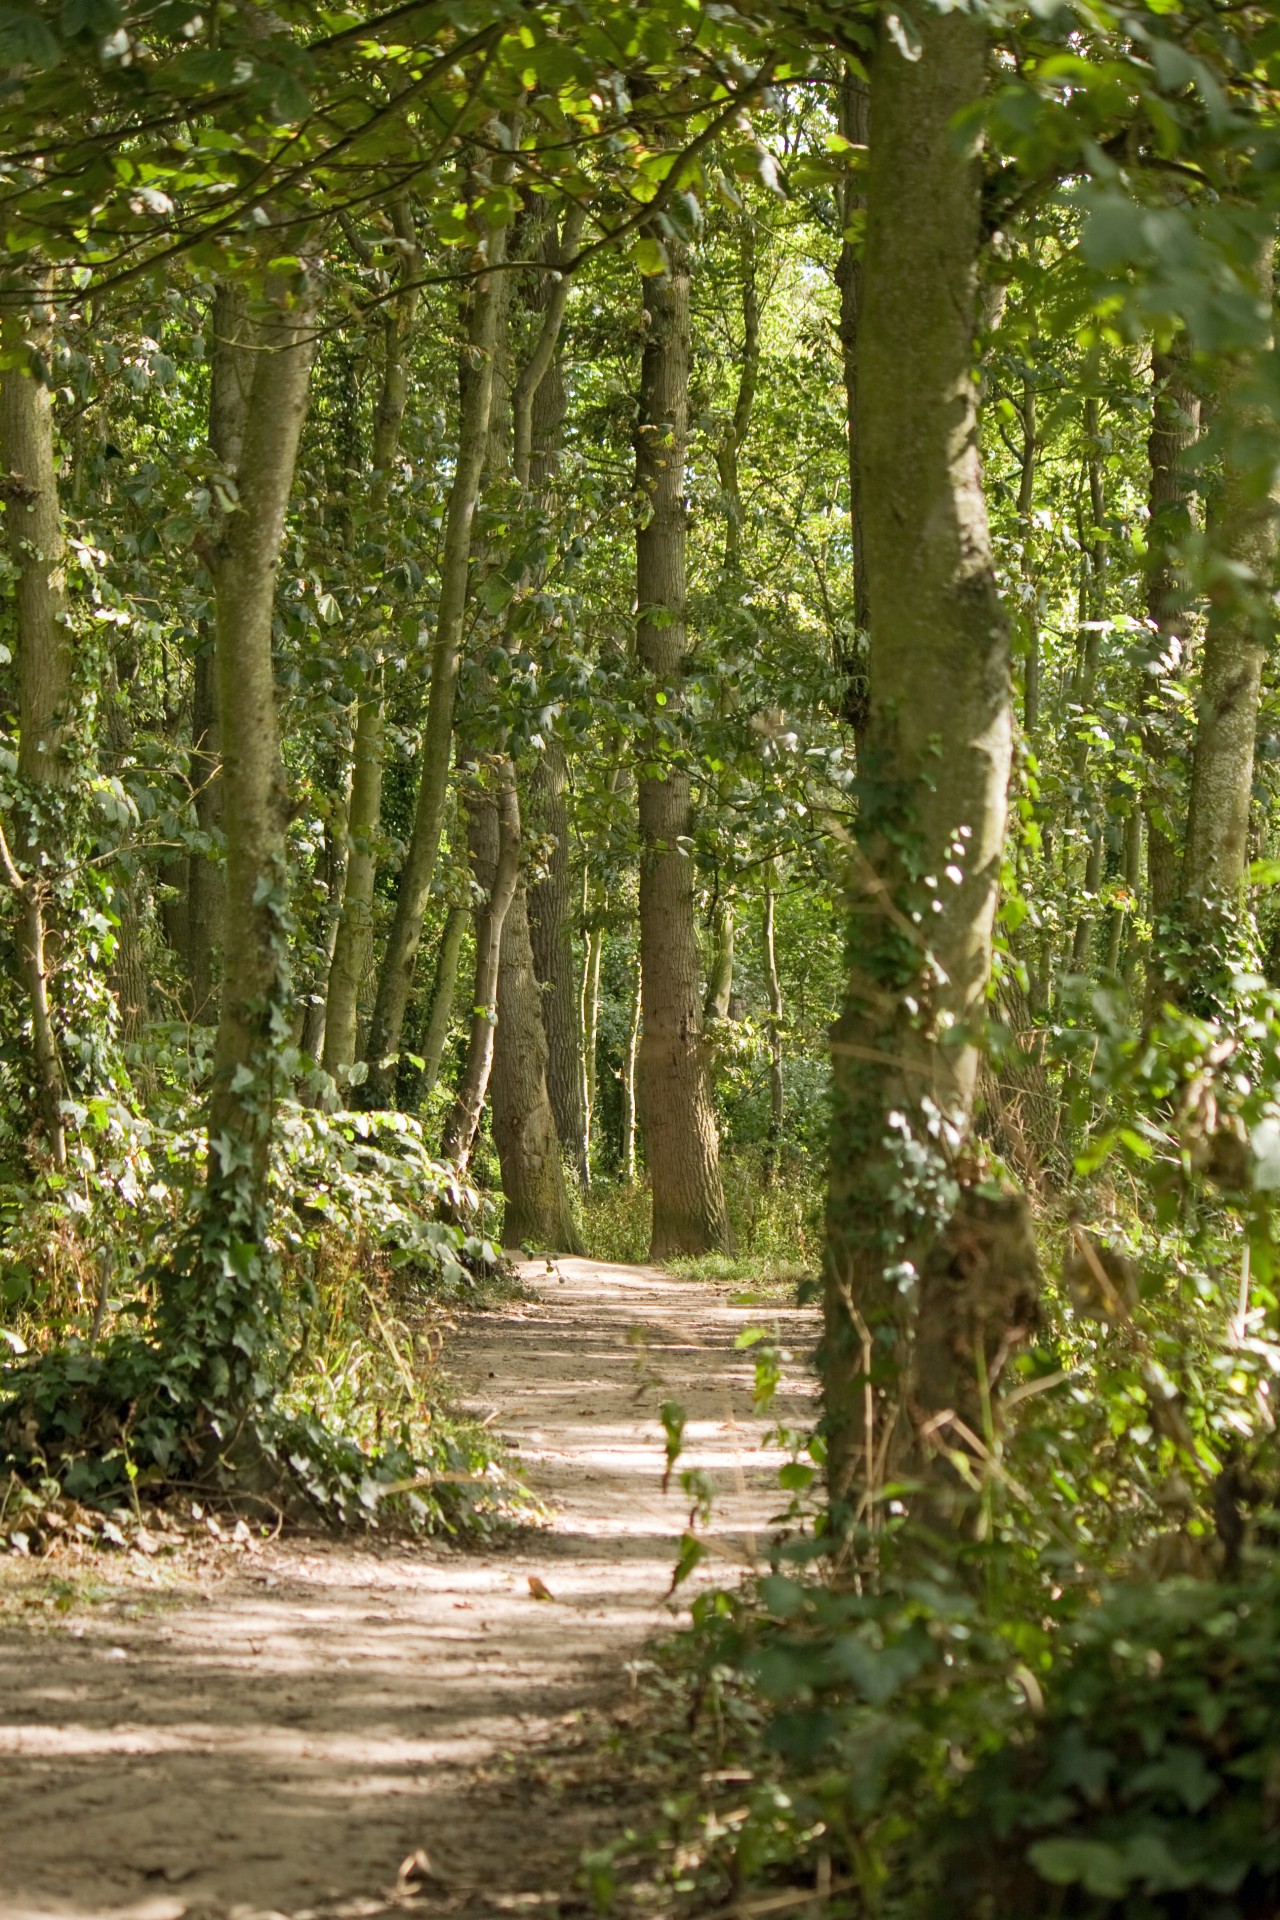 Sunlit woodland trail walk through the trees